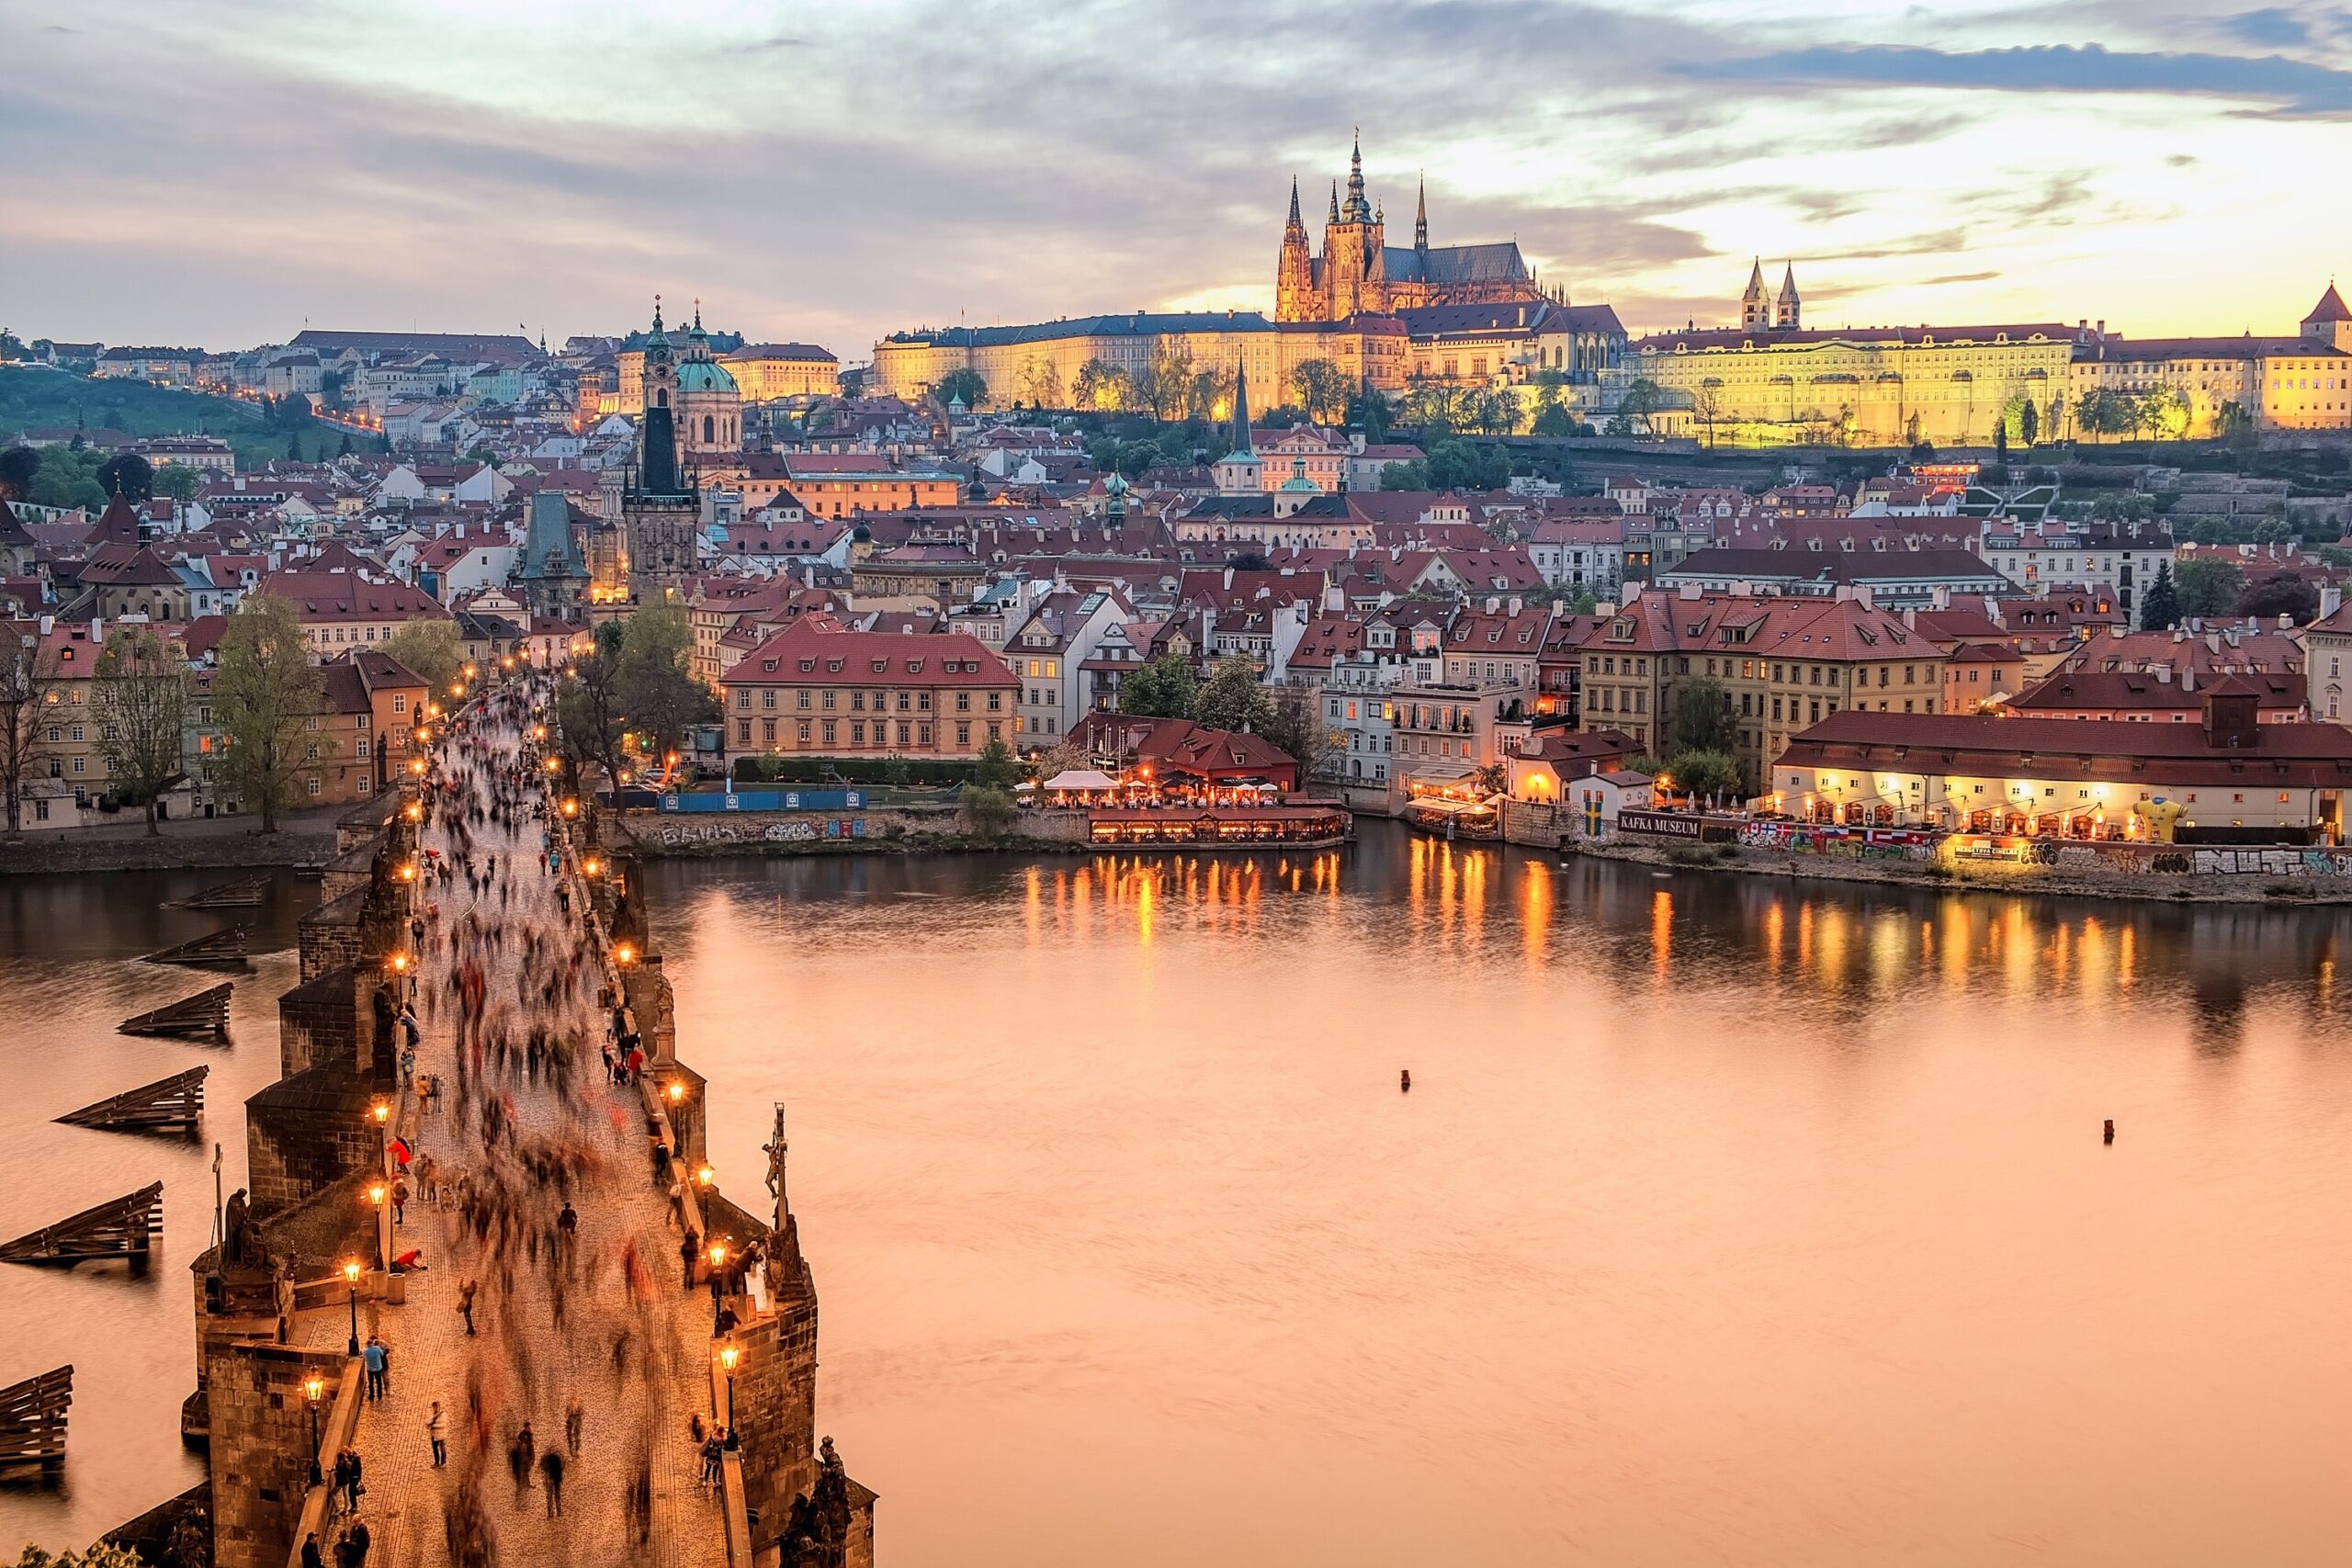 Prague, Czech Republic (Photo Credit: William Zhang on Unsplash)